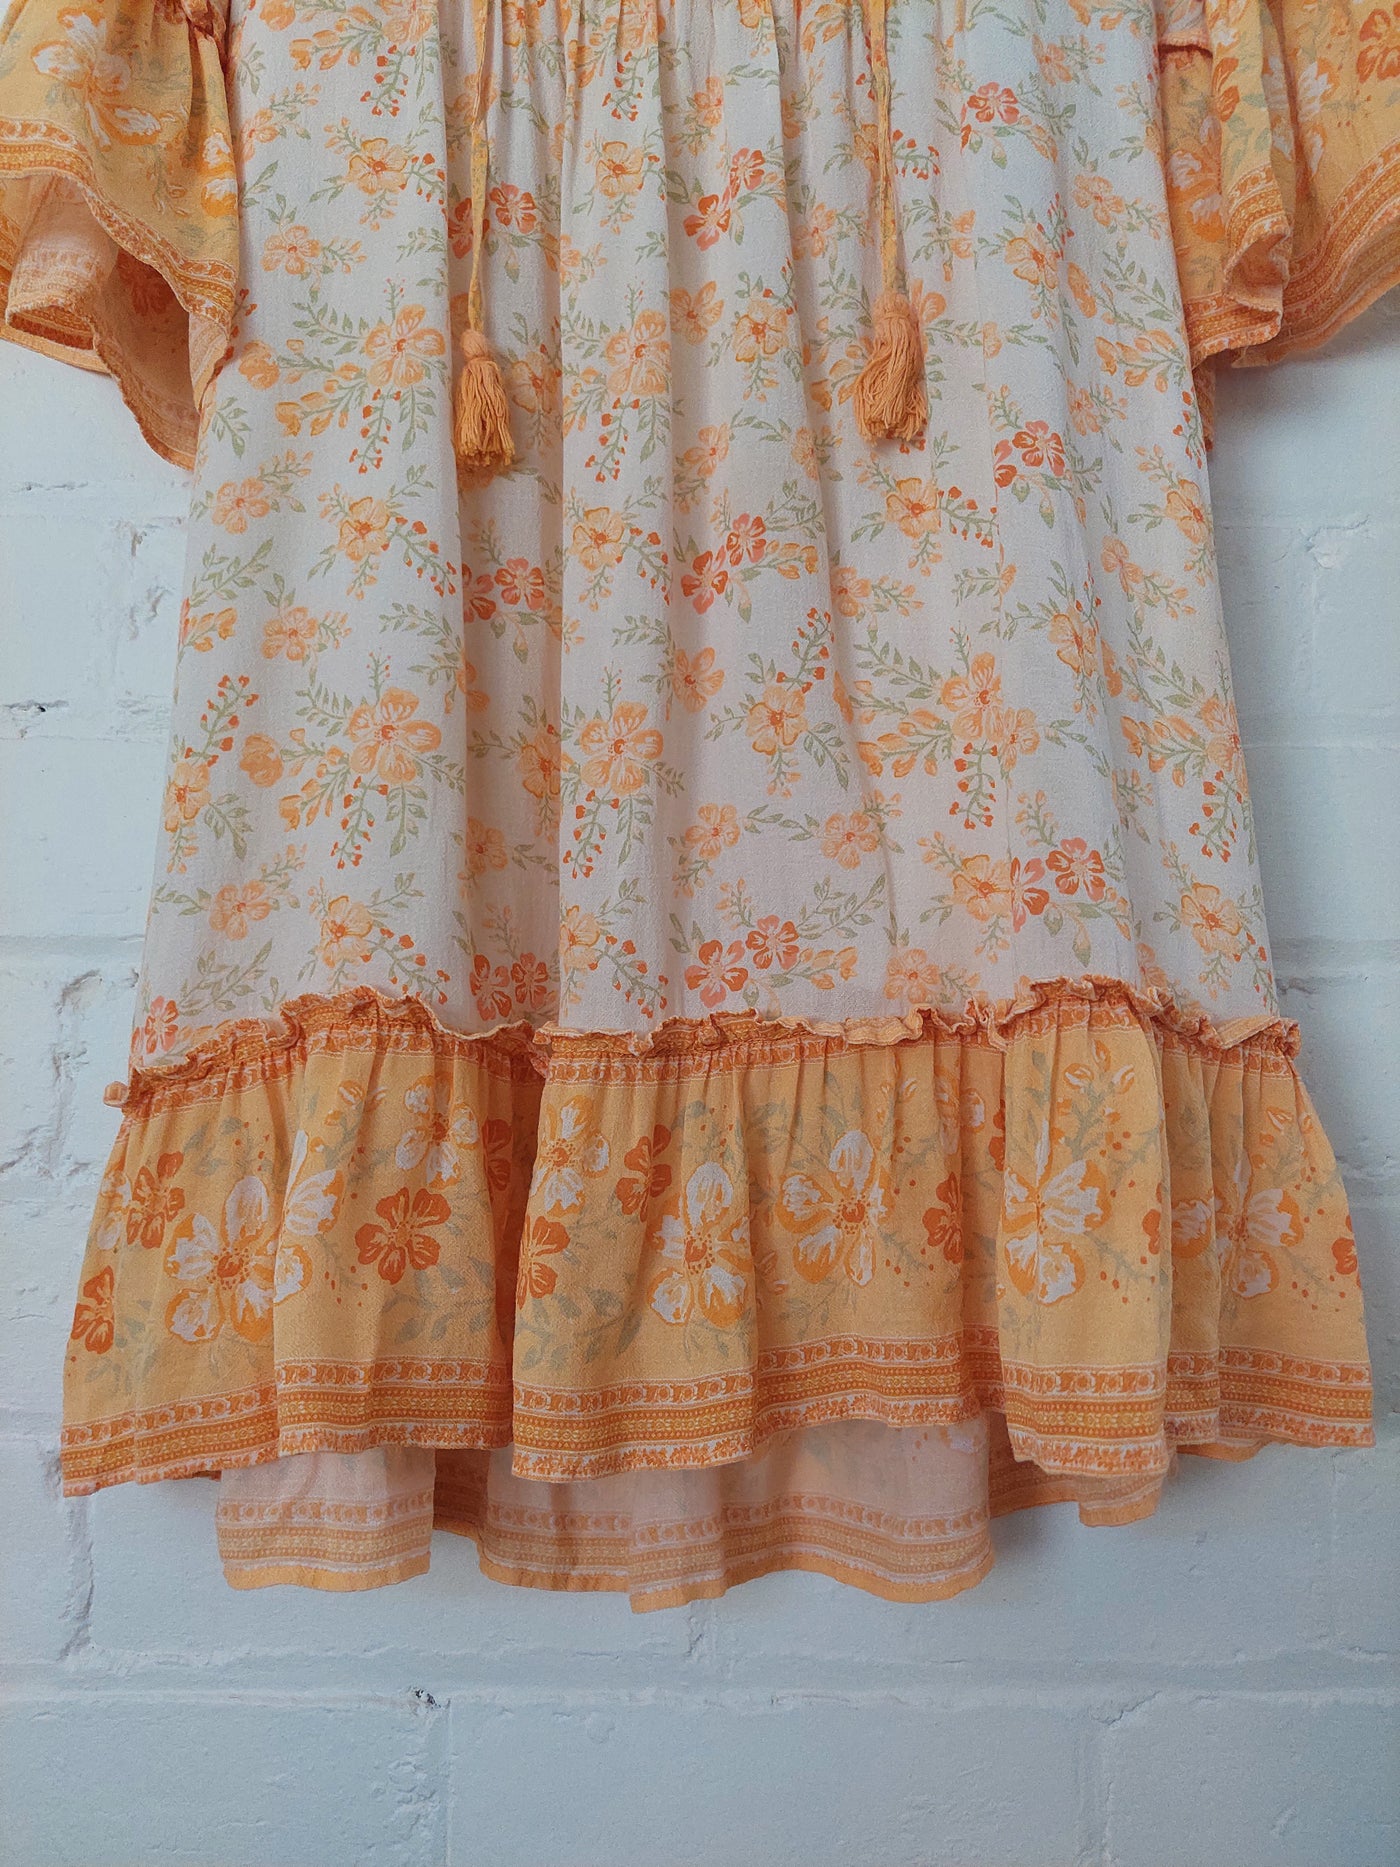 Arnhem Clothing 'Lily' Mini Dress in Lemon Drop Yellow Floral, Size 12